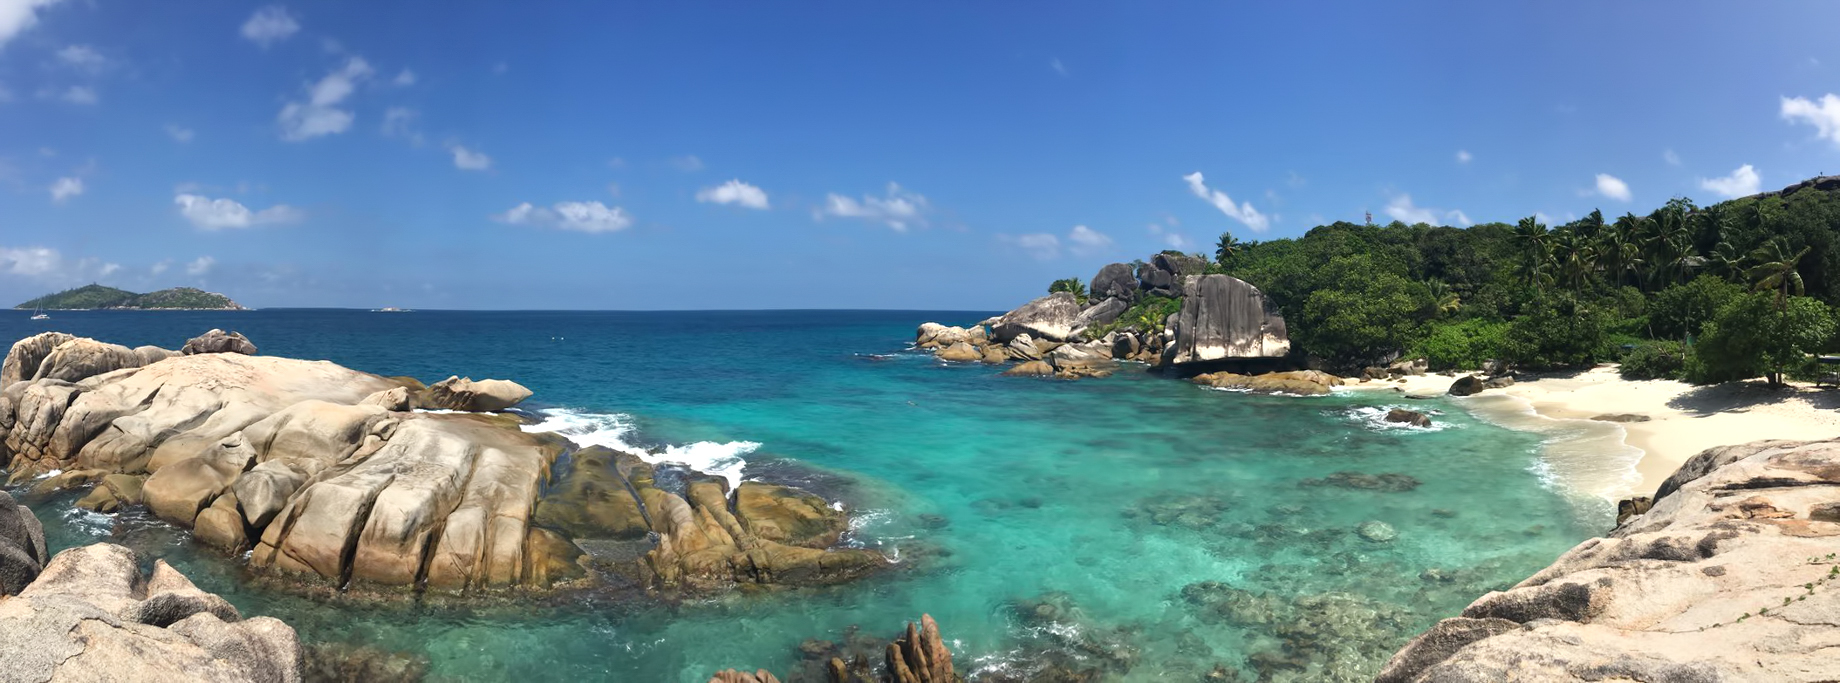 Six Senses Zil Pasyon Resort – Felicite Island, Seychelles – Tropical Rocky Beach